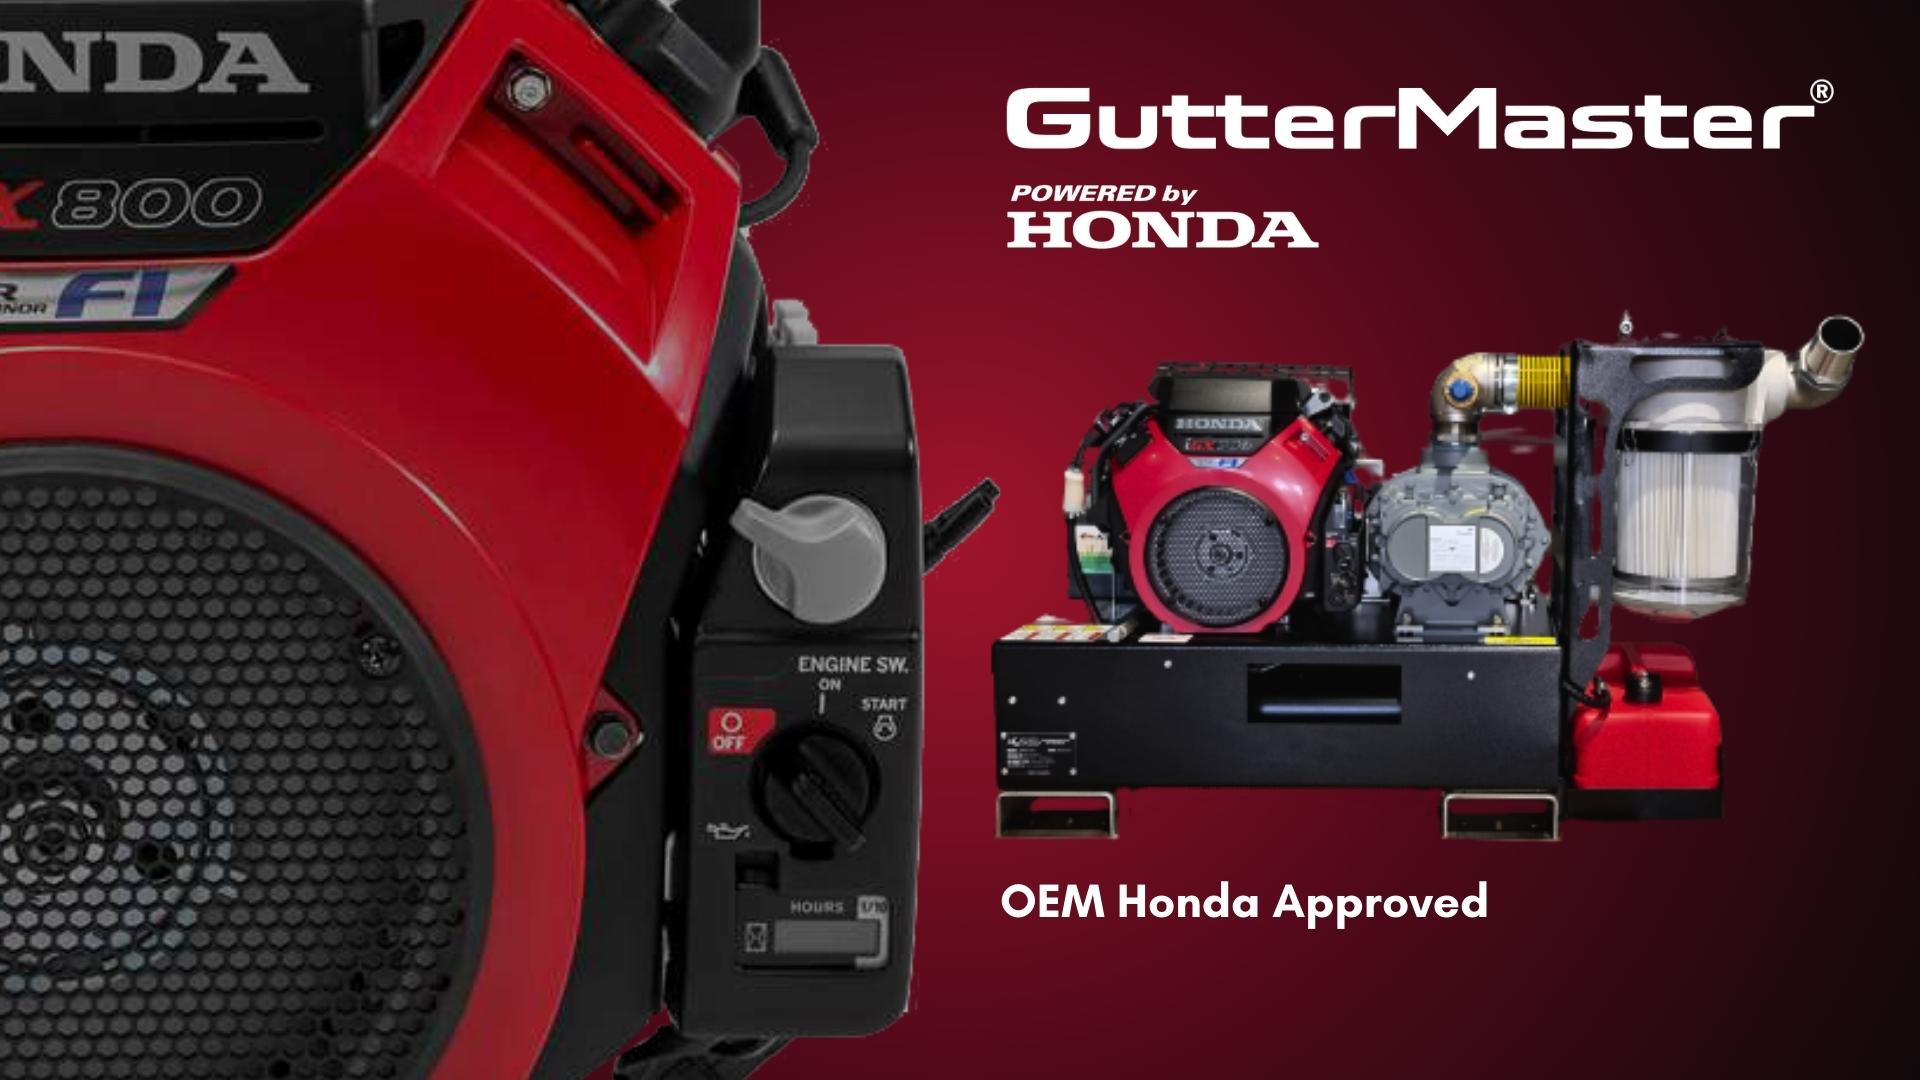 Gutter vacuum system gatter master 2050 powered by Honda